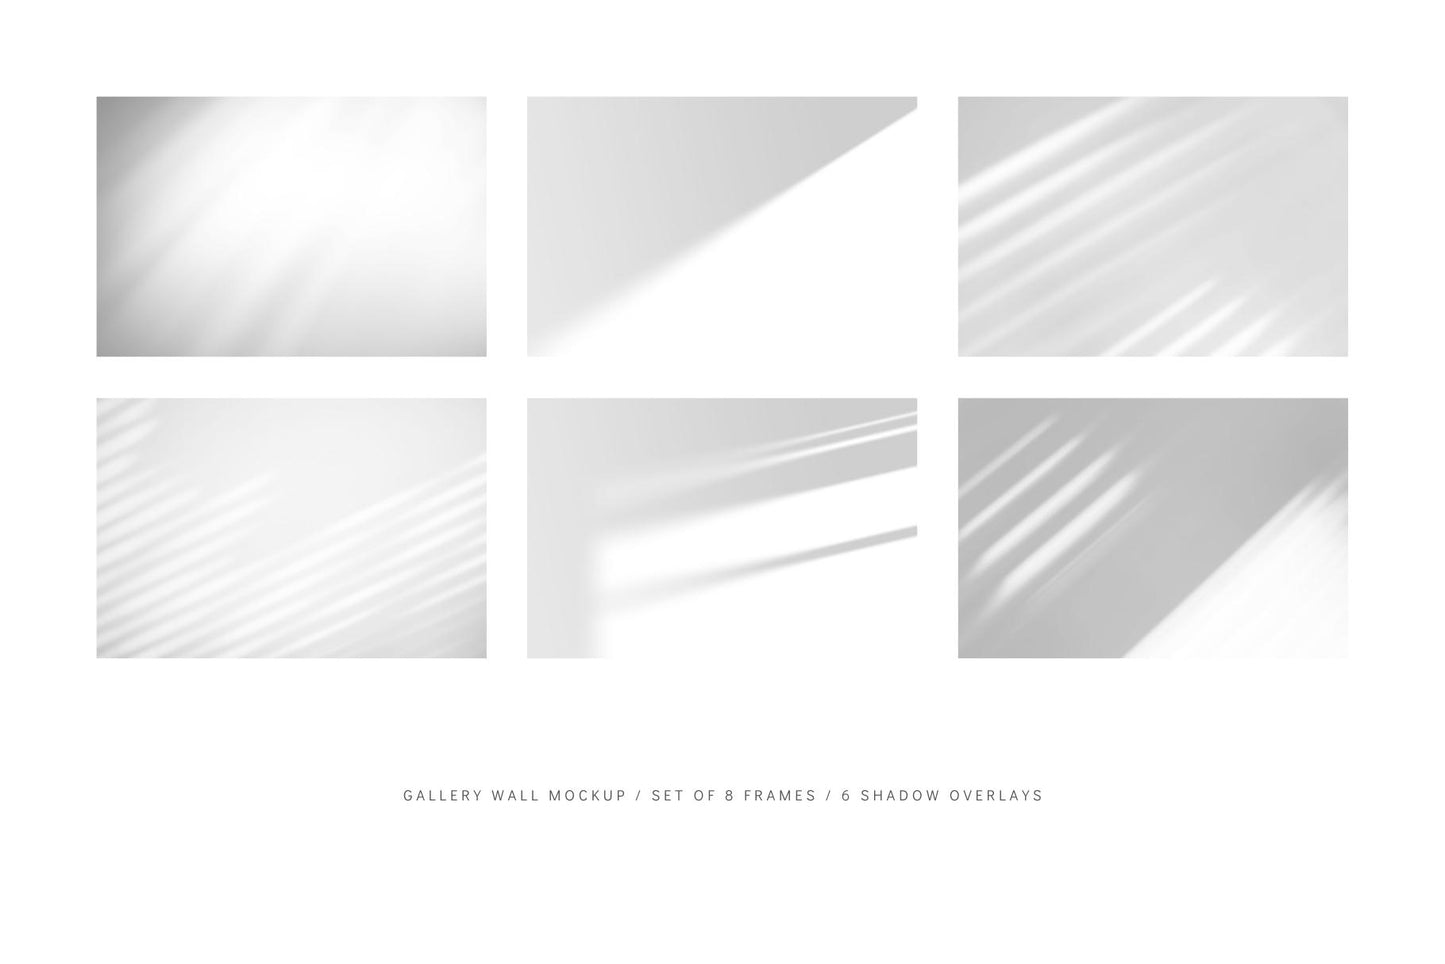 Gallery Wall Mockup | Set of 8 Frames | Frame Mockup | PSD | Shadow Overlays